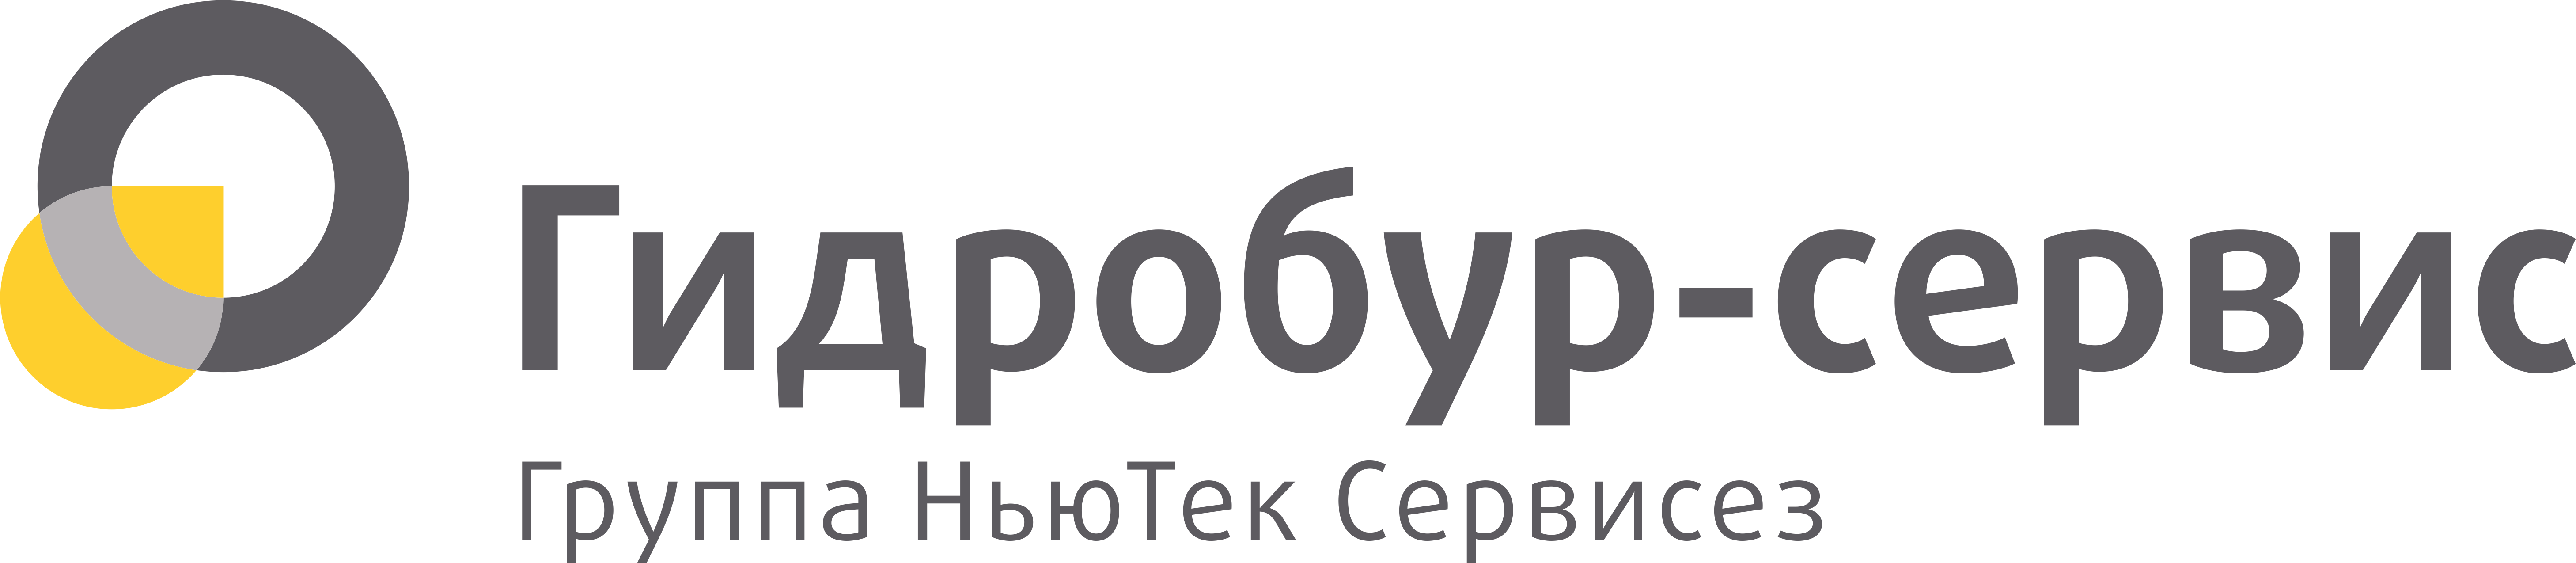 logo company gydrobur